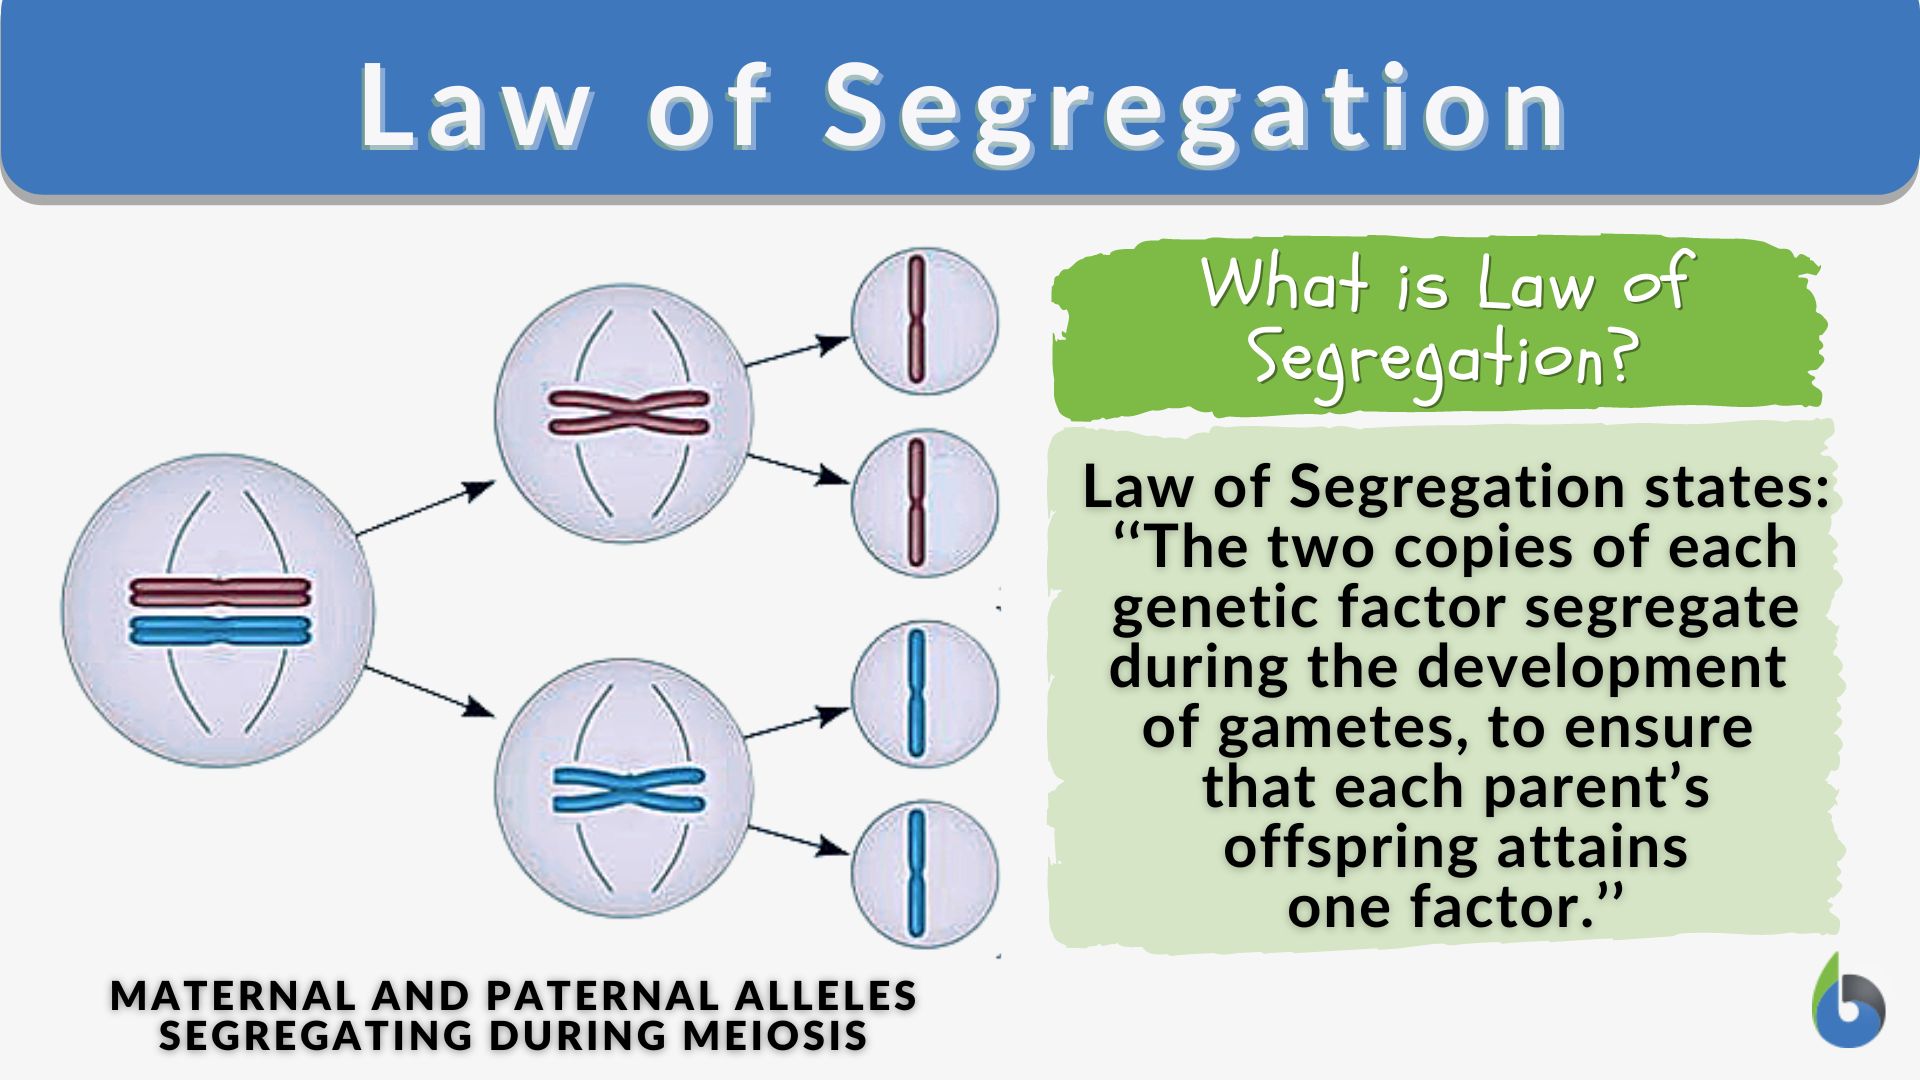 https://www.biologyonline.com/wp-content/uploads/2019/10/Law-of-Segregation-definition-and-example.jpg